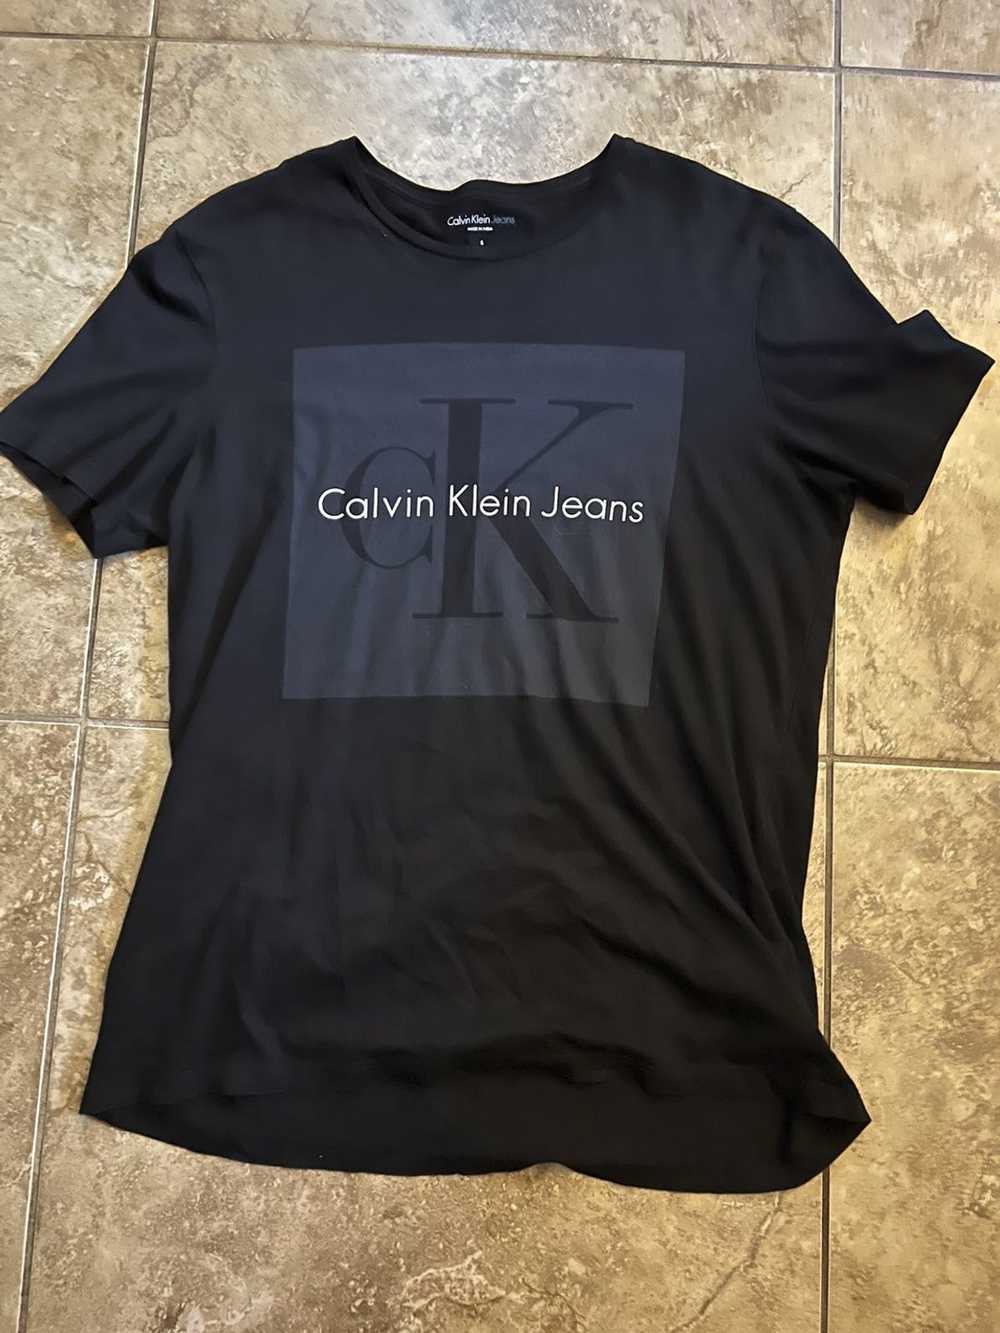 Calvin Klein Calvin Klein Jeans Black tee - image 1